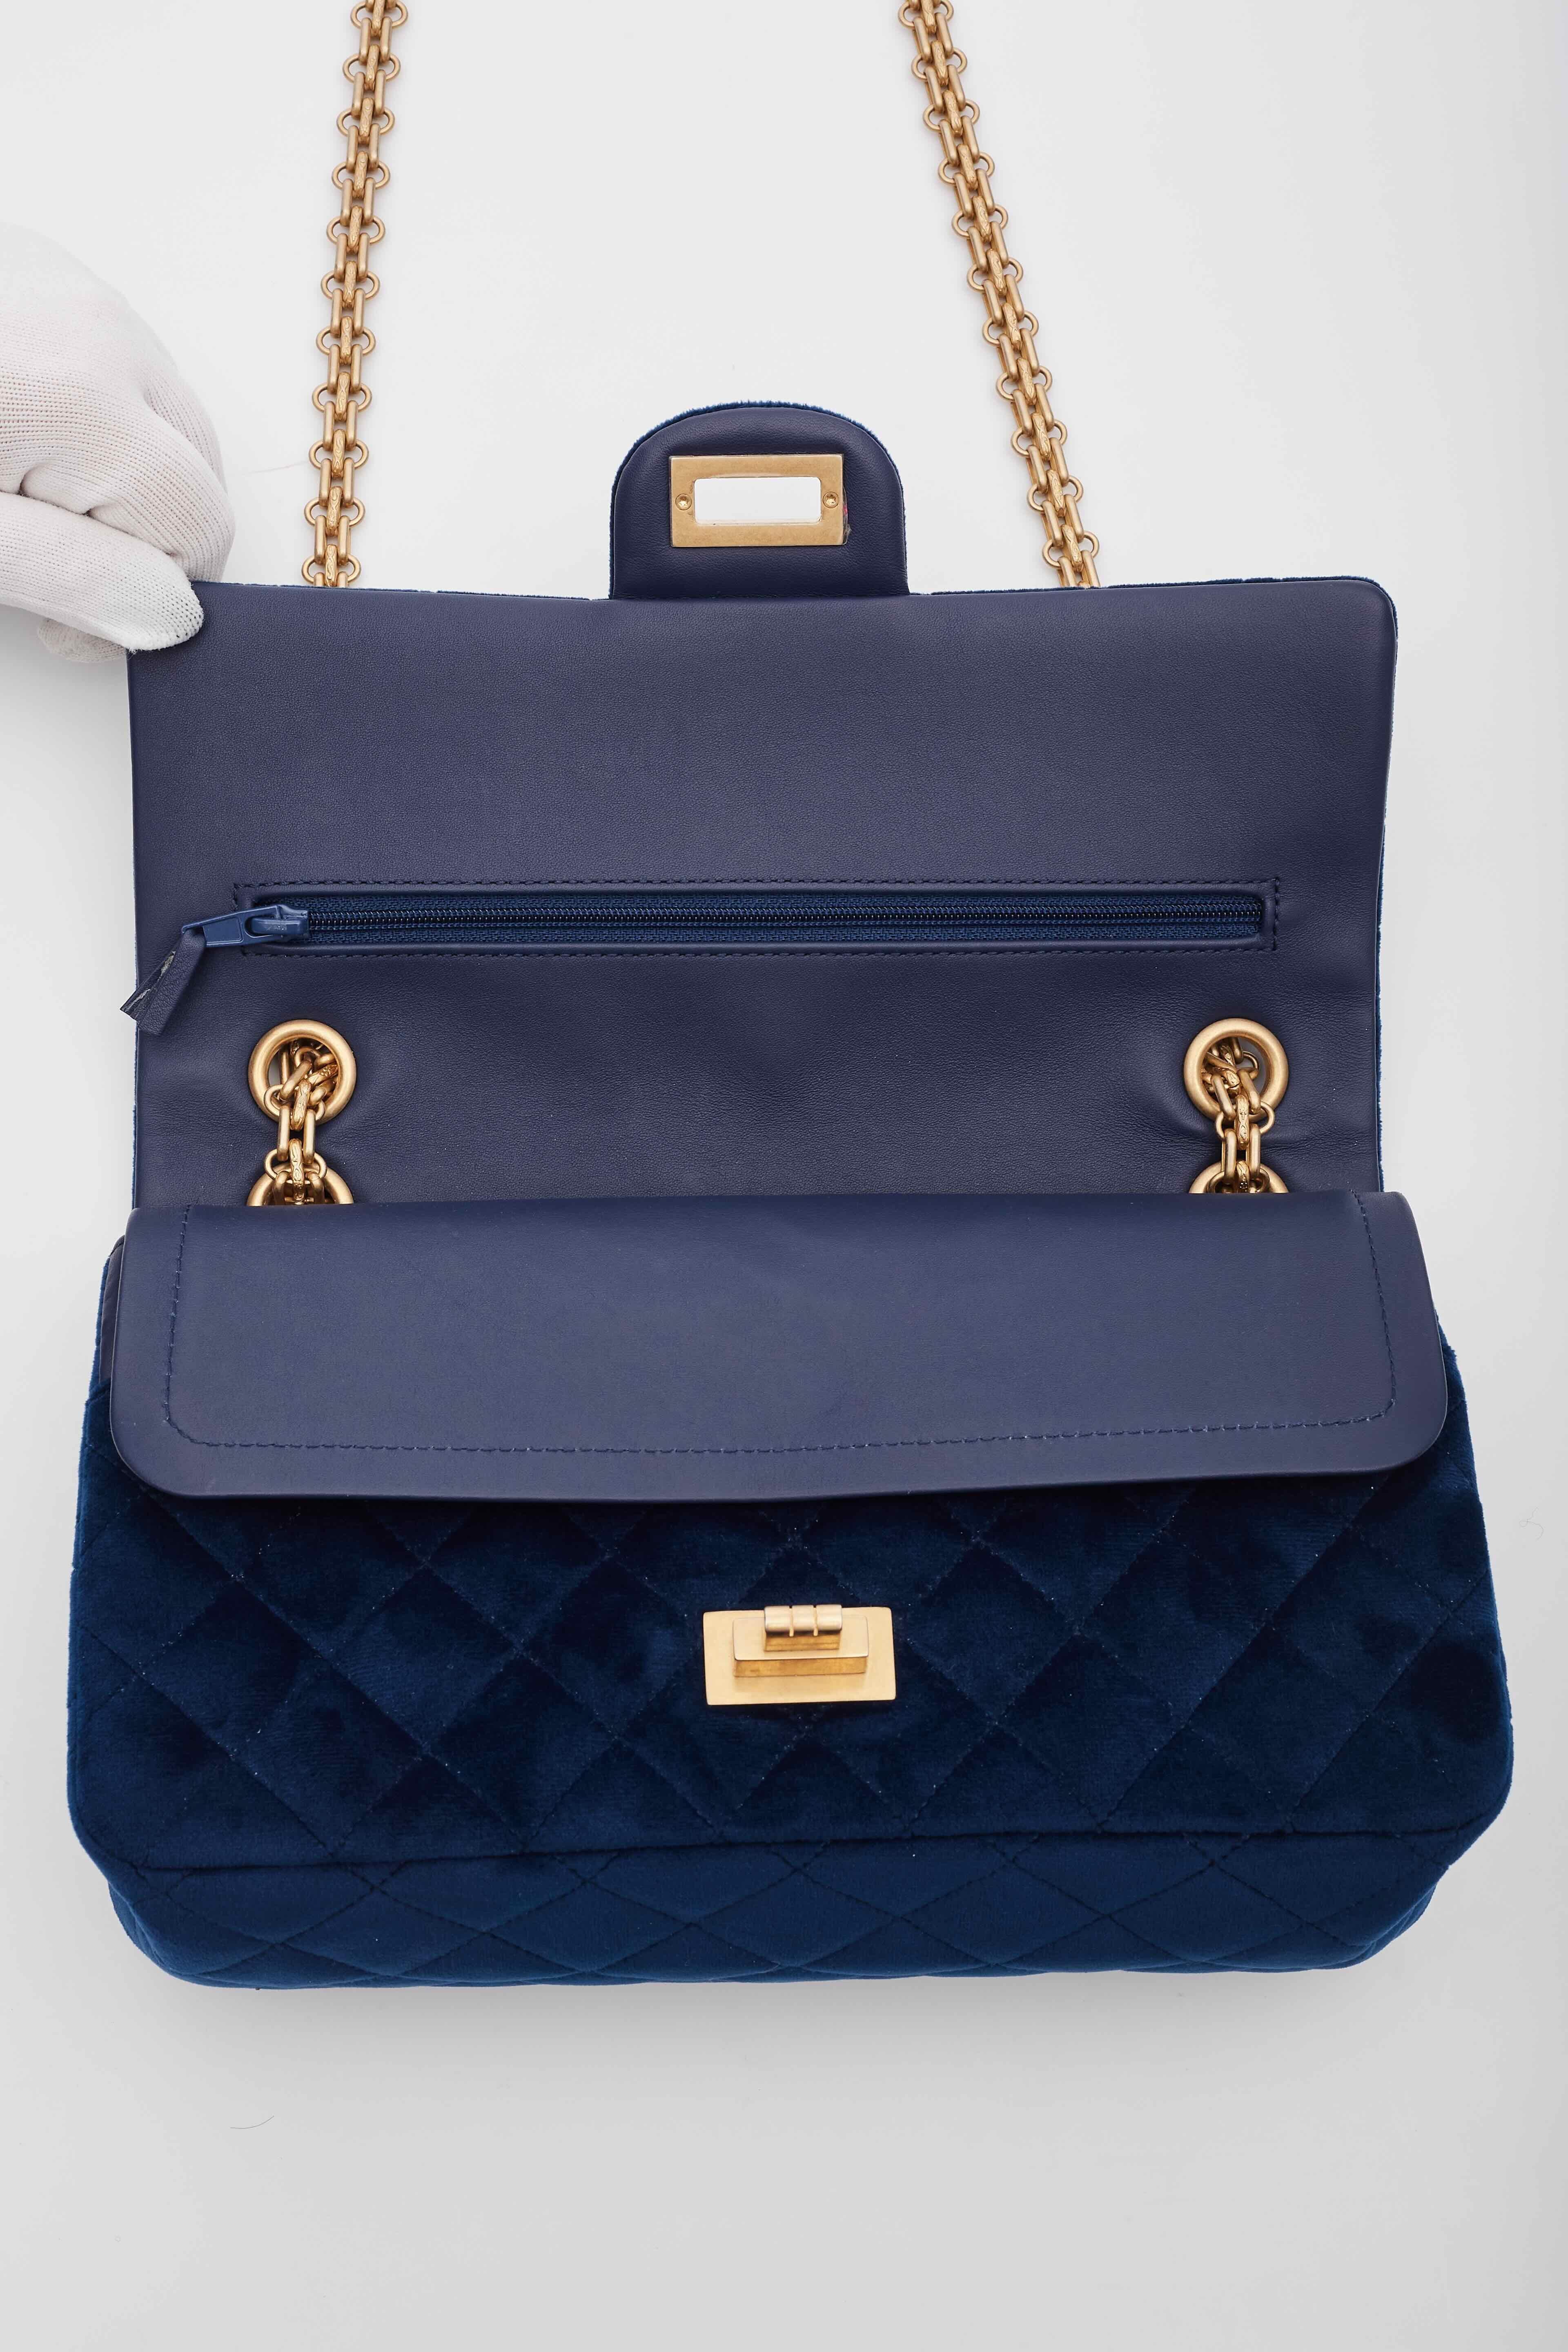 Chanel Velvet Quilted Mini 2.55 Reissue Flap Blue For Sale 3